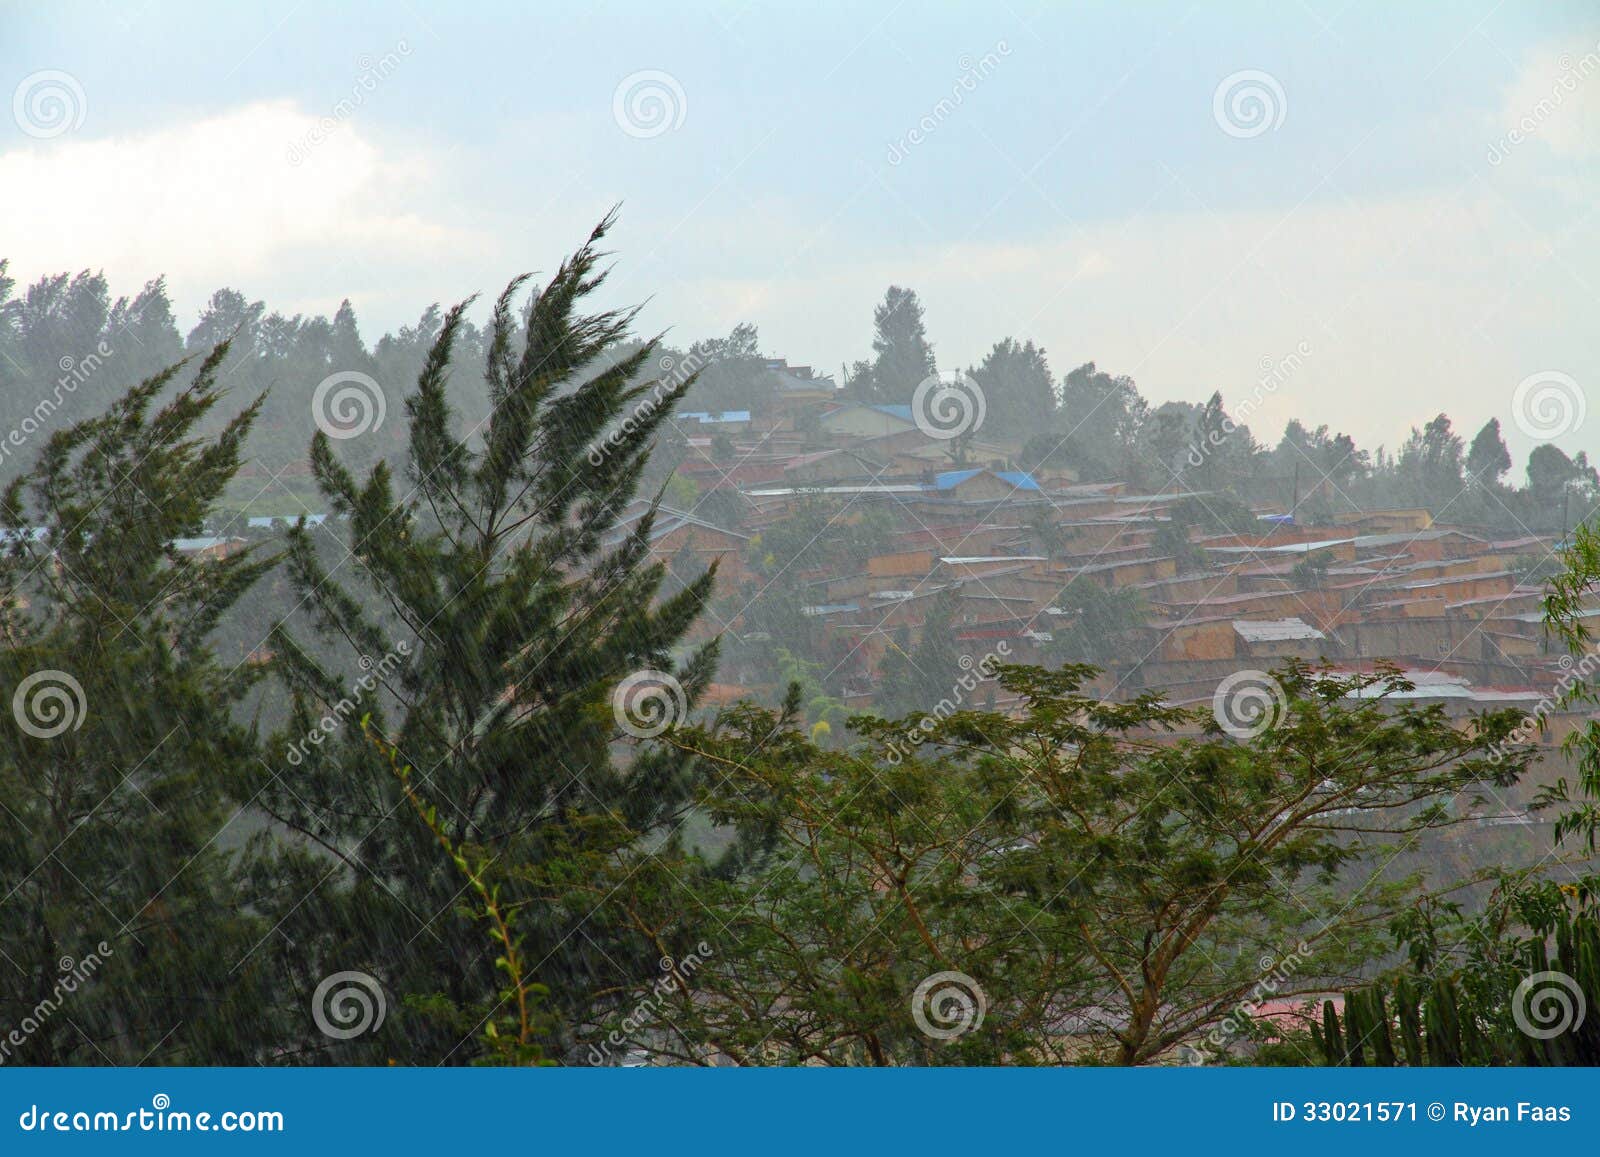 rain over kigali